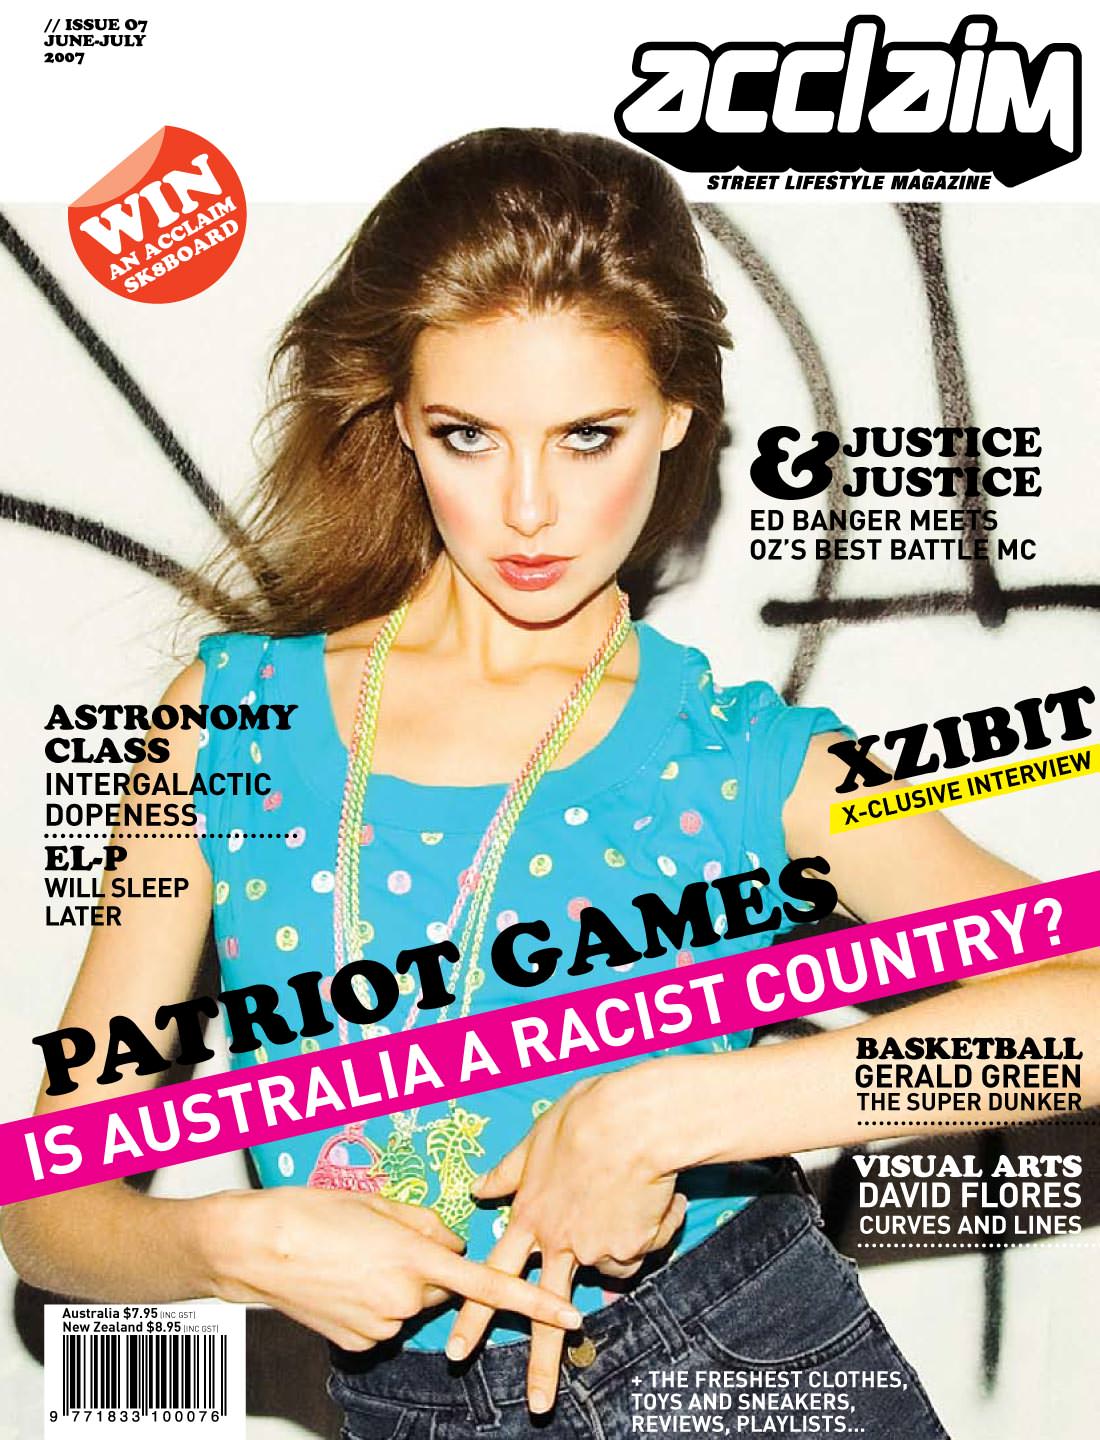 Cover for Acclaim magazine